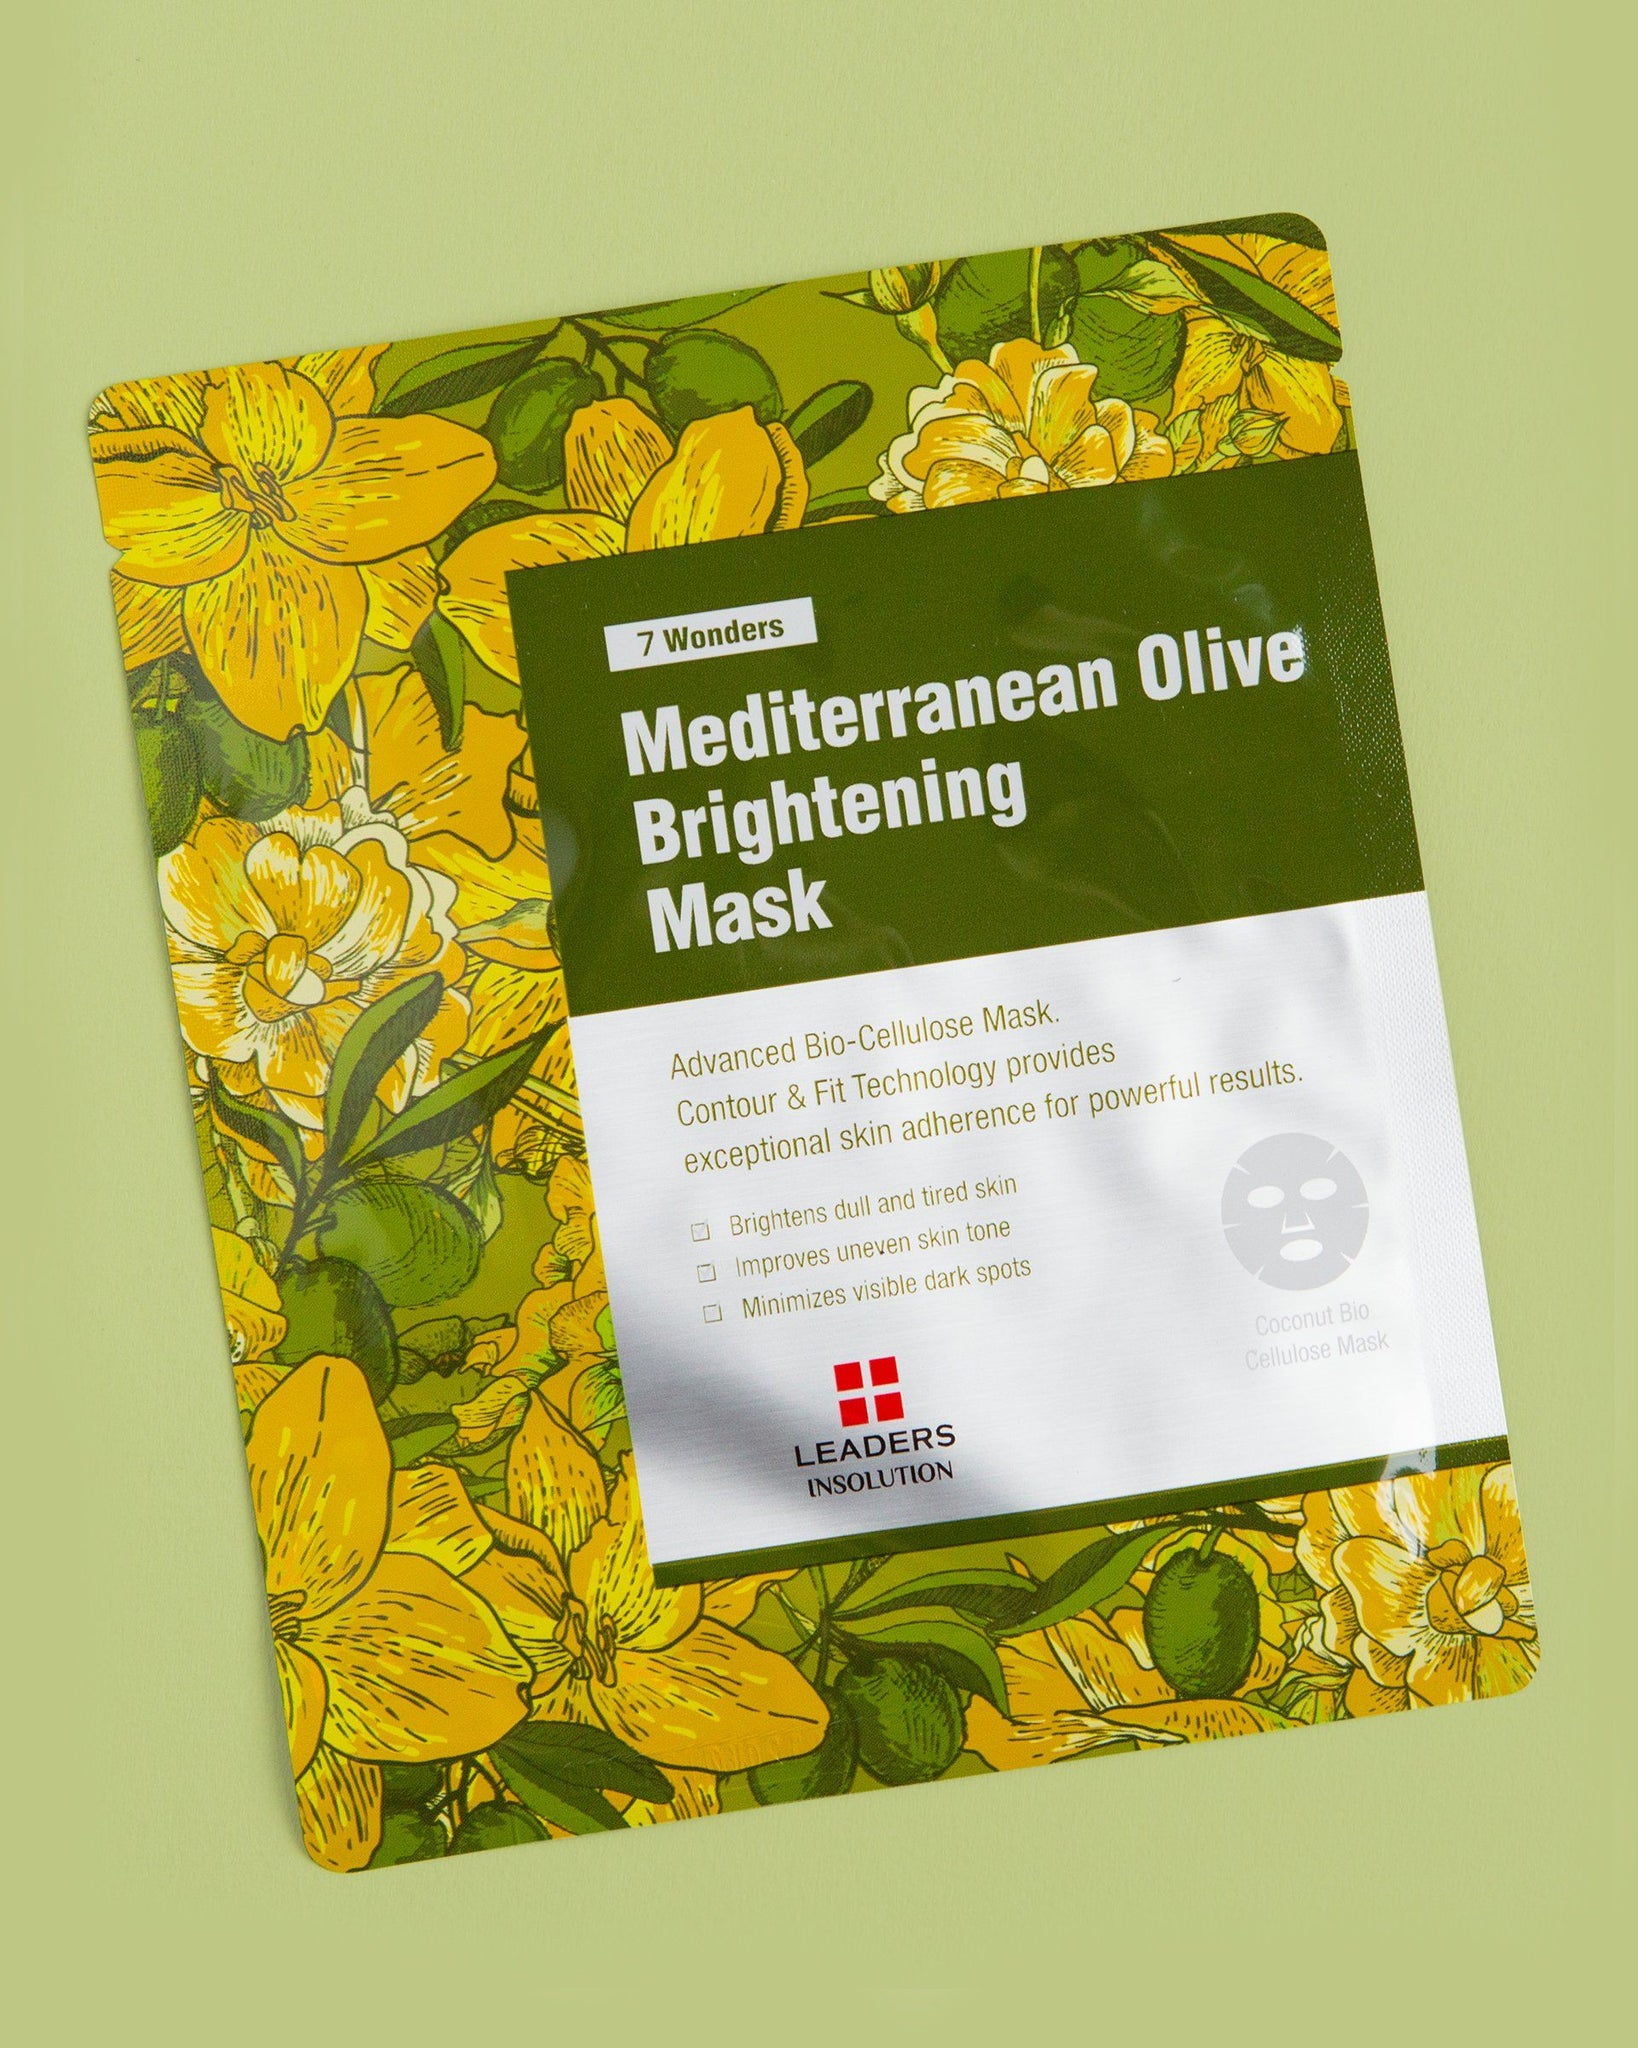 7 Wonders Mediterranean Olive Brightening Mask Product